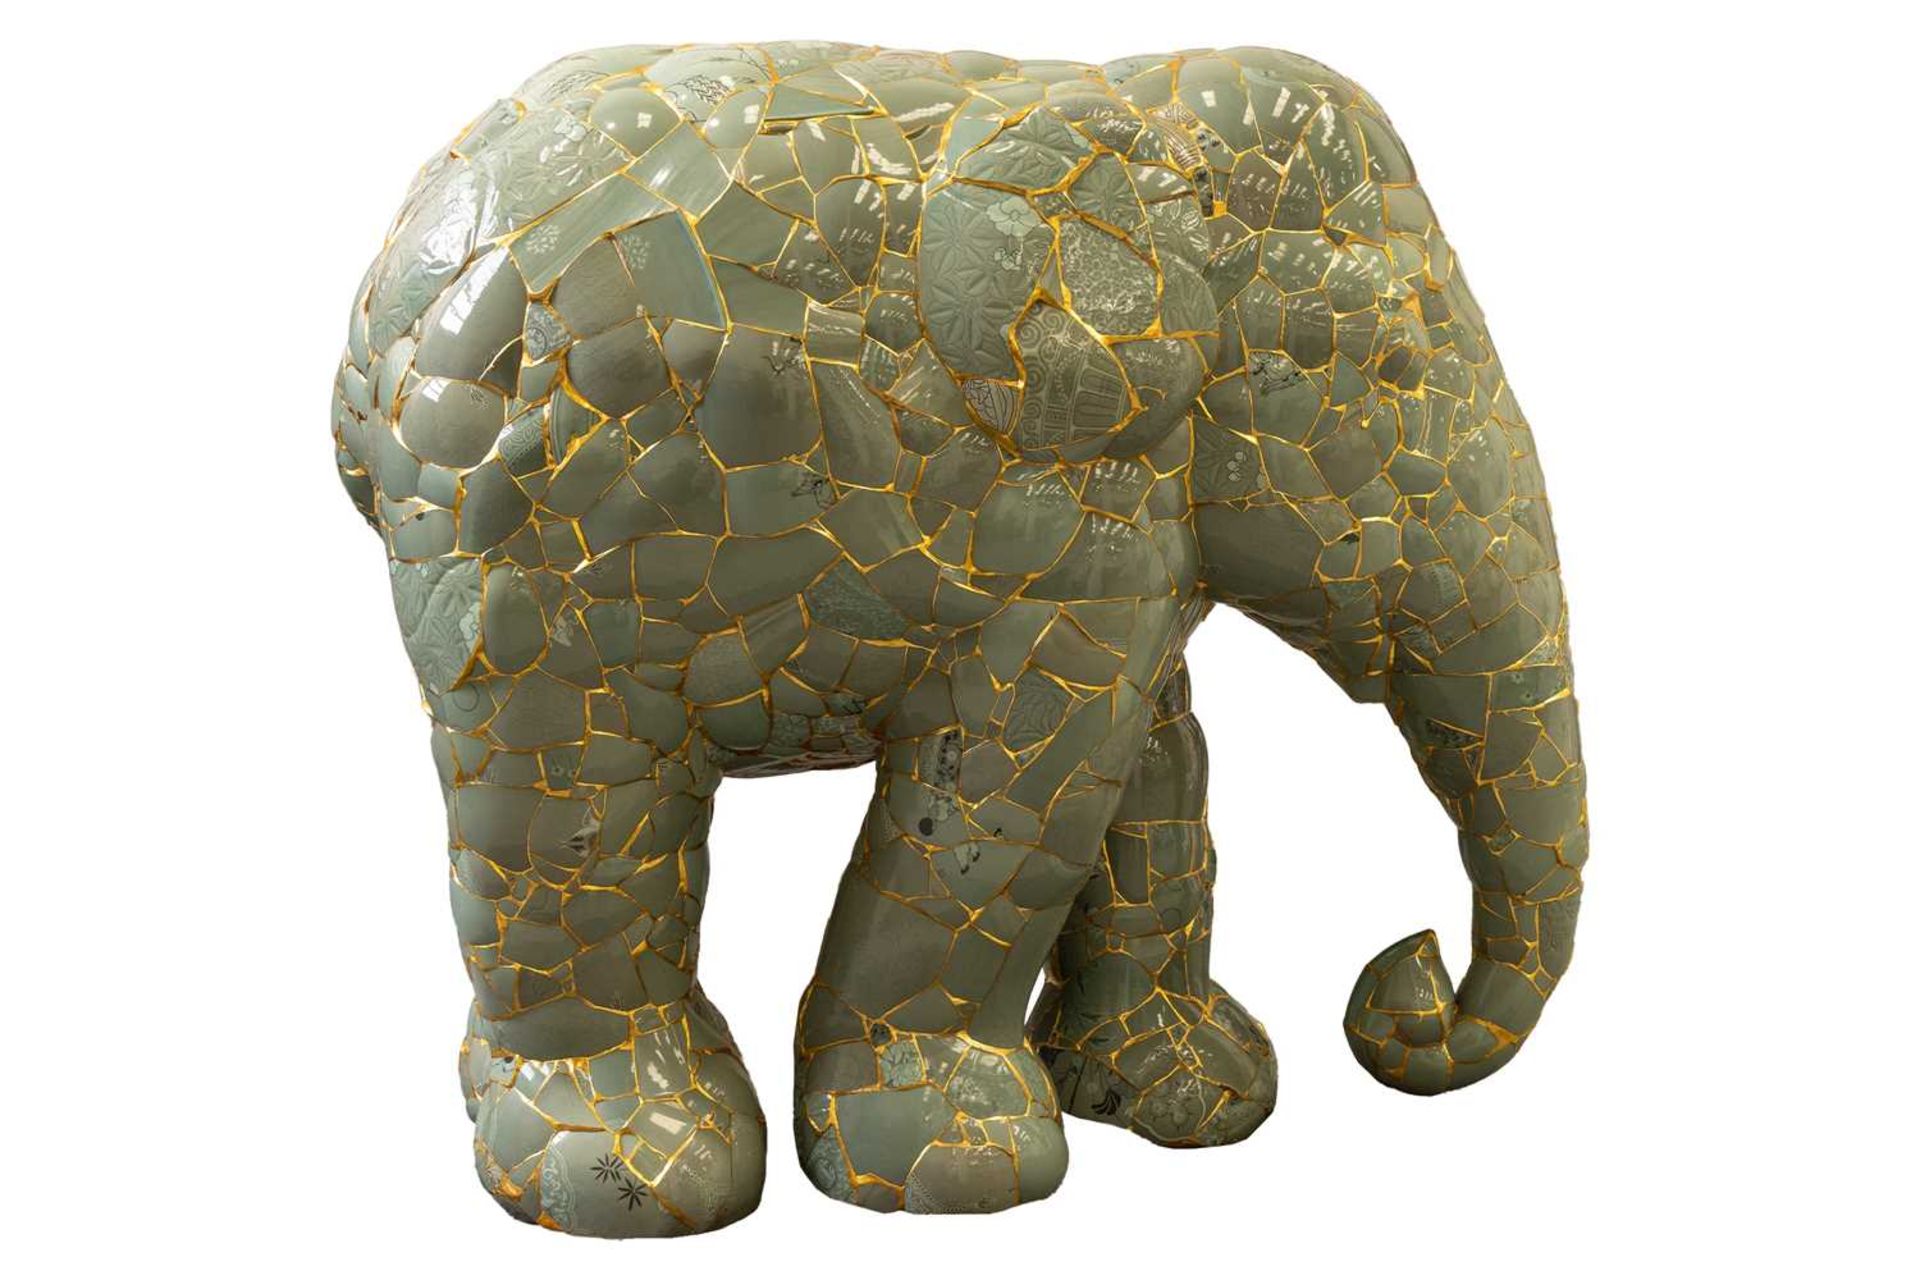 Yeesookyung (b. 1963) South Korean, 'Translated Vase Baby Elephant' (2012), celadon ceramic pieces f - Image 3 of 16